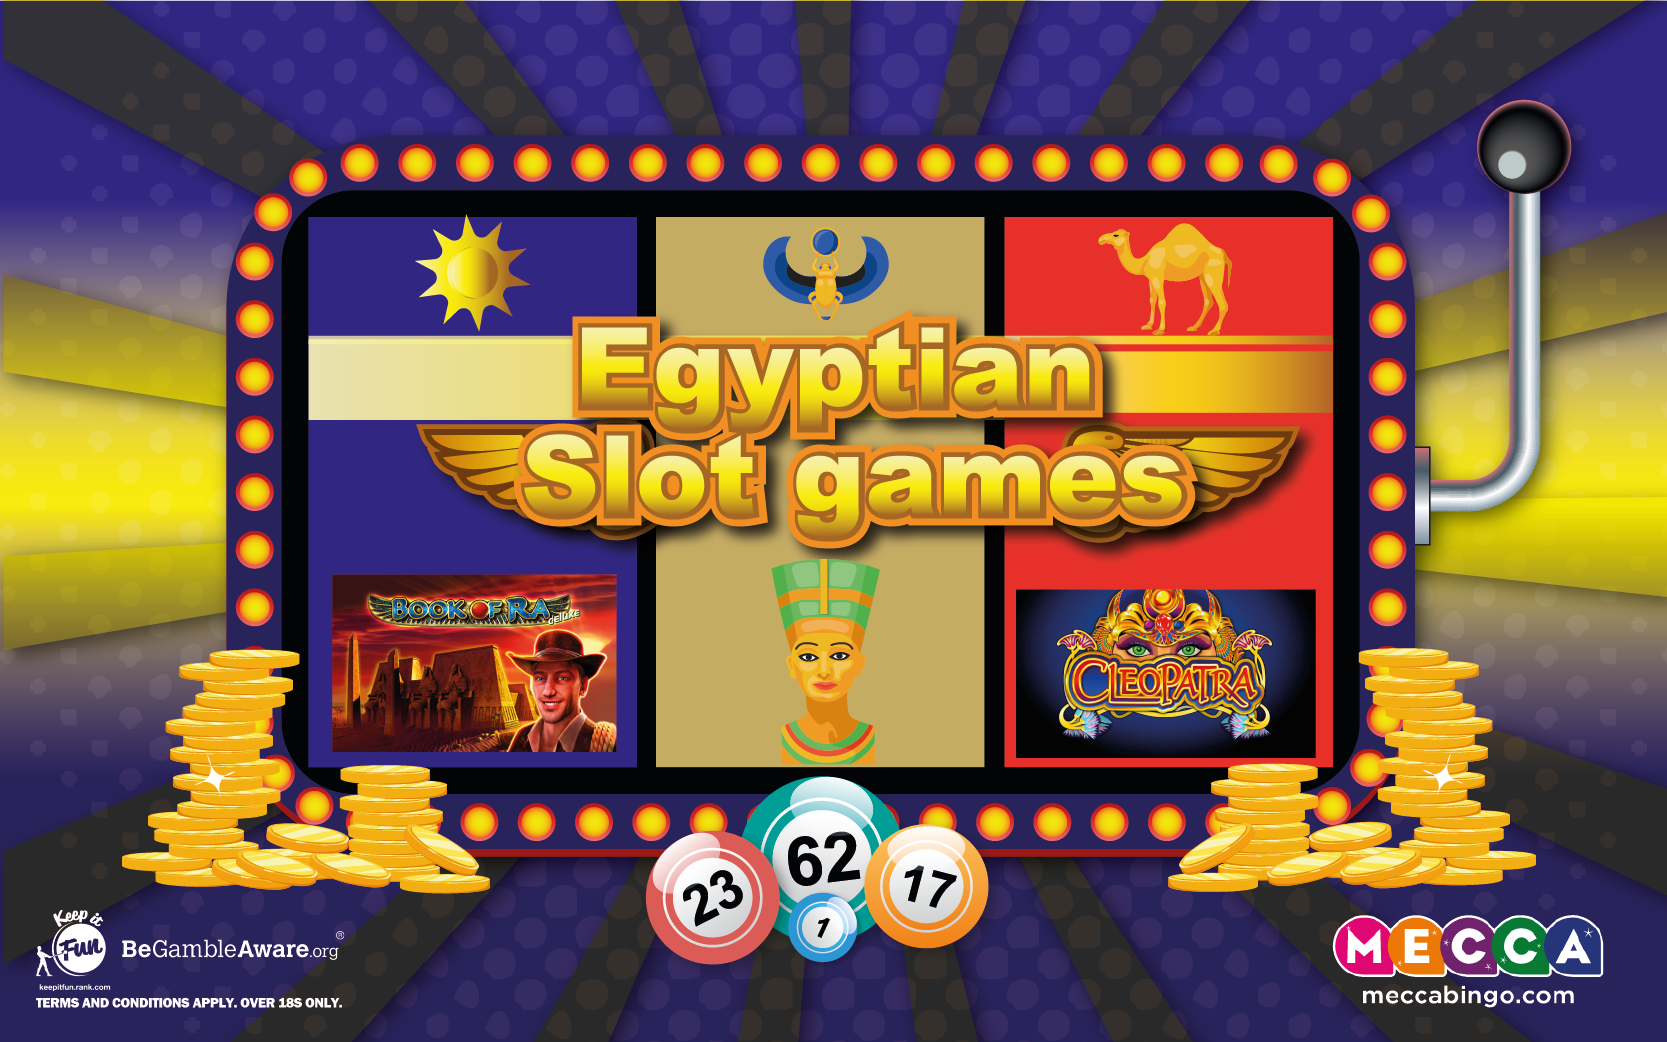 Themed slot games: Egyptian slots at Mecca Bingo